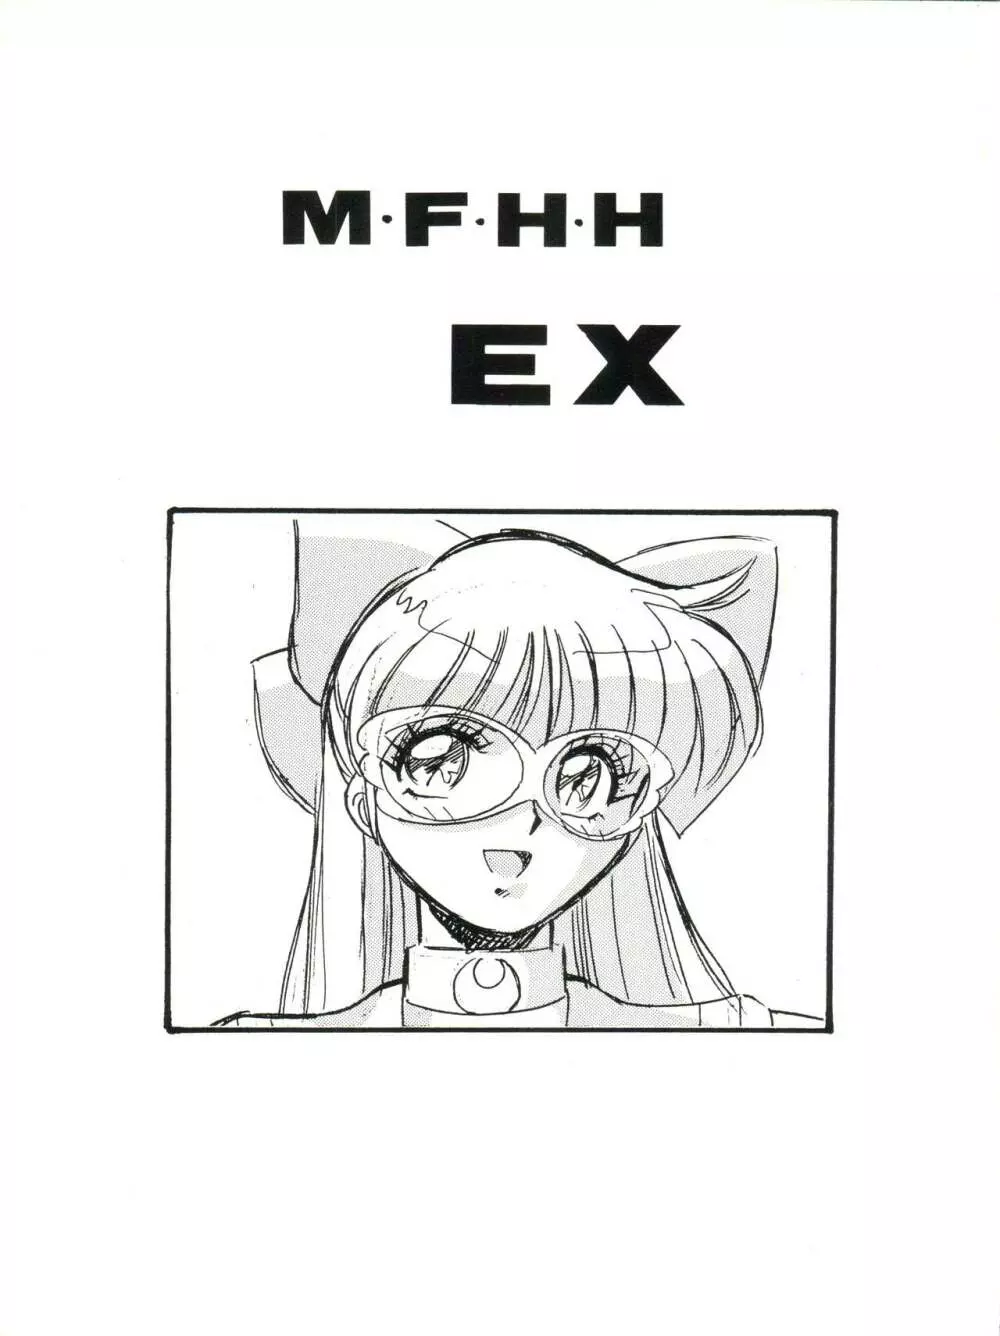 M.F.H.H EX Melon Frappe Half and Half EX